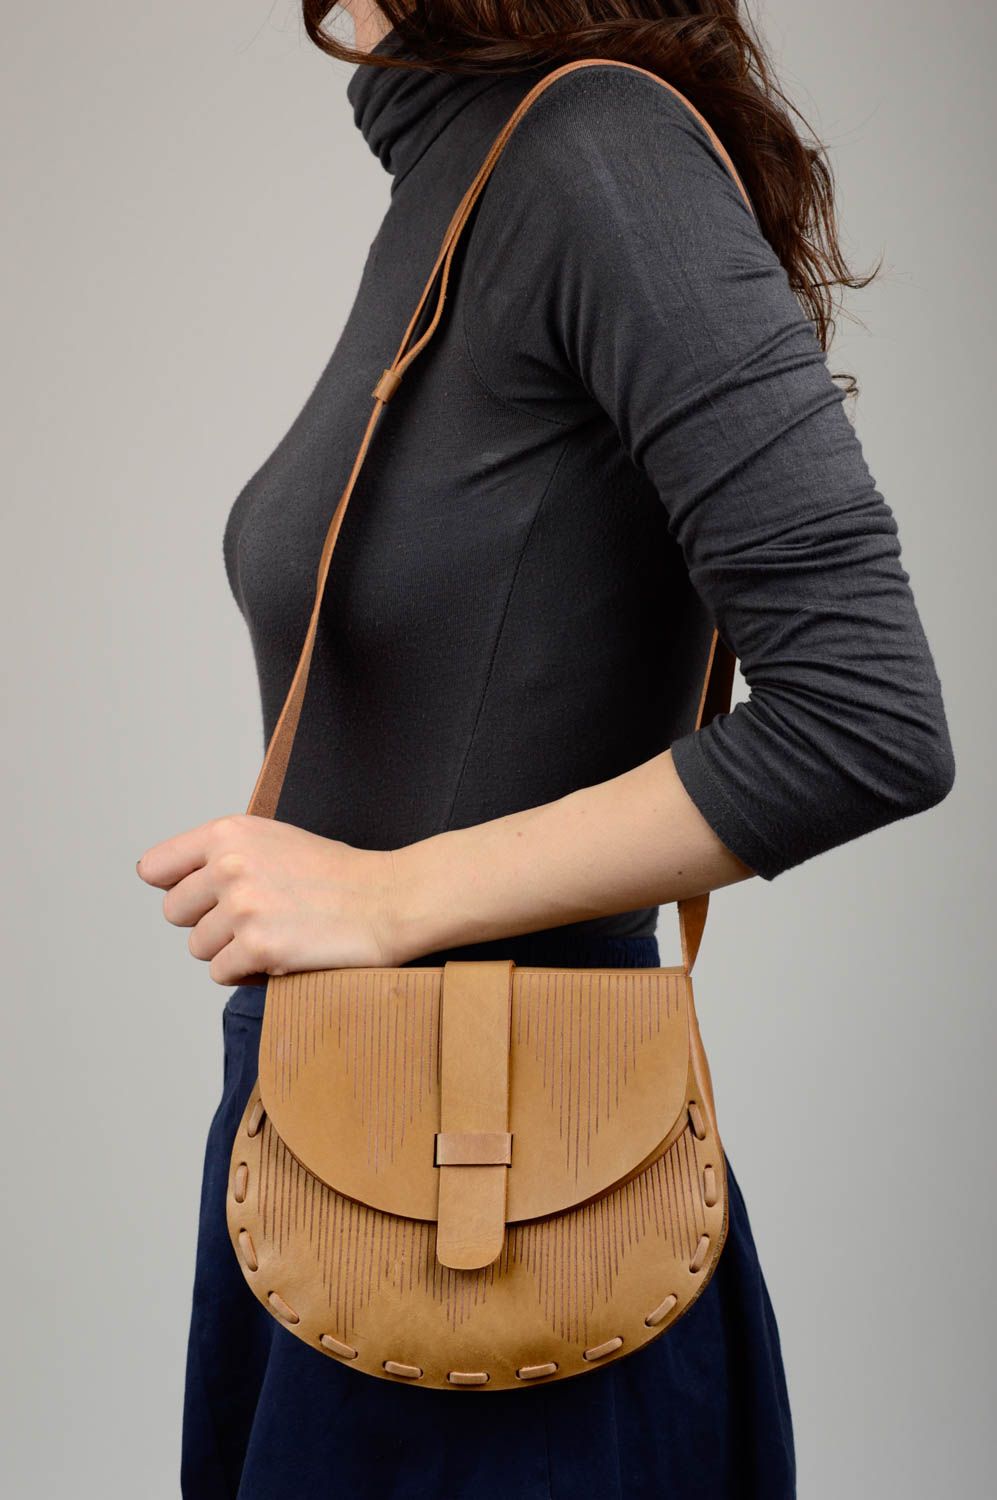 Shoulder bag handmade leather purse brown ladys bag boho style purse nice gift photo 2